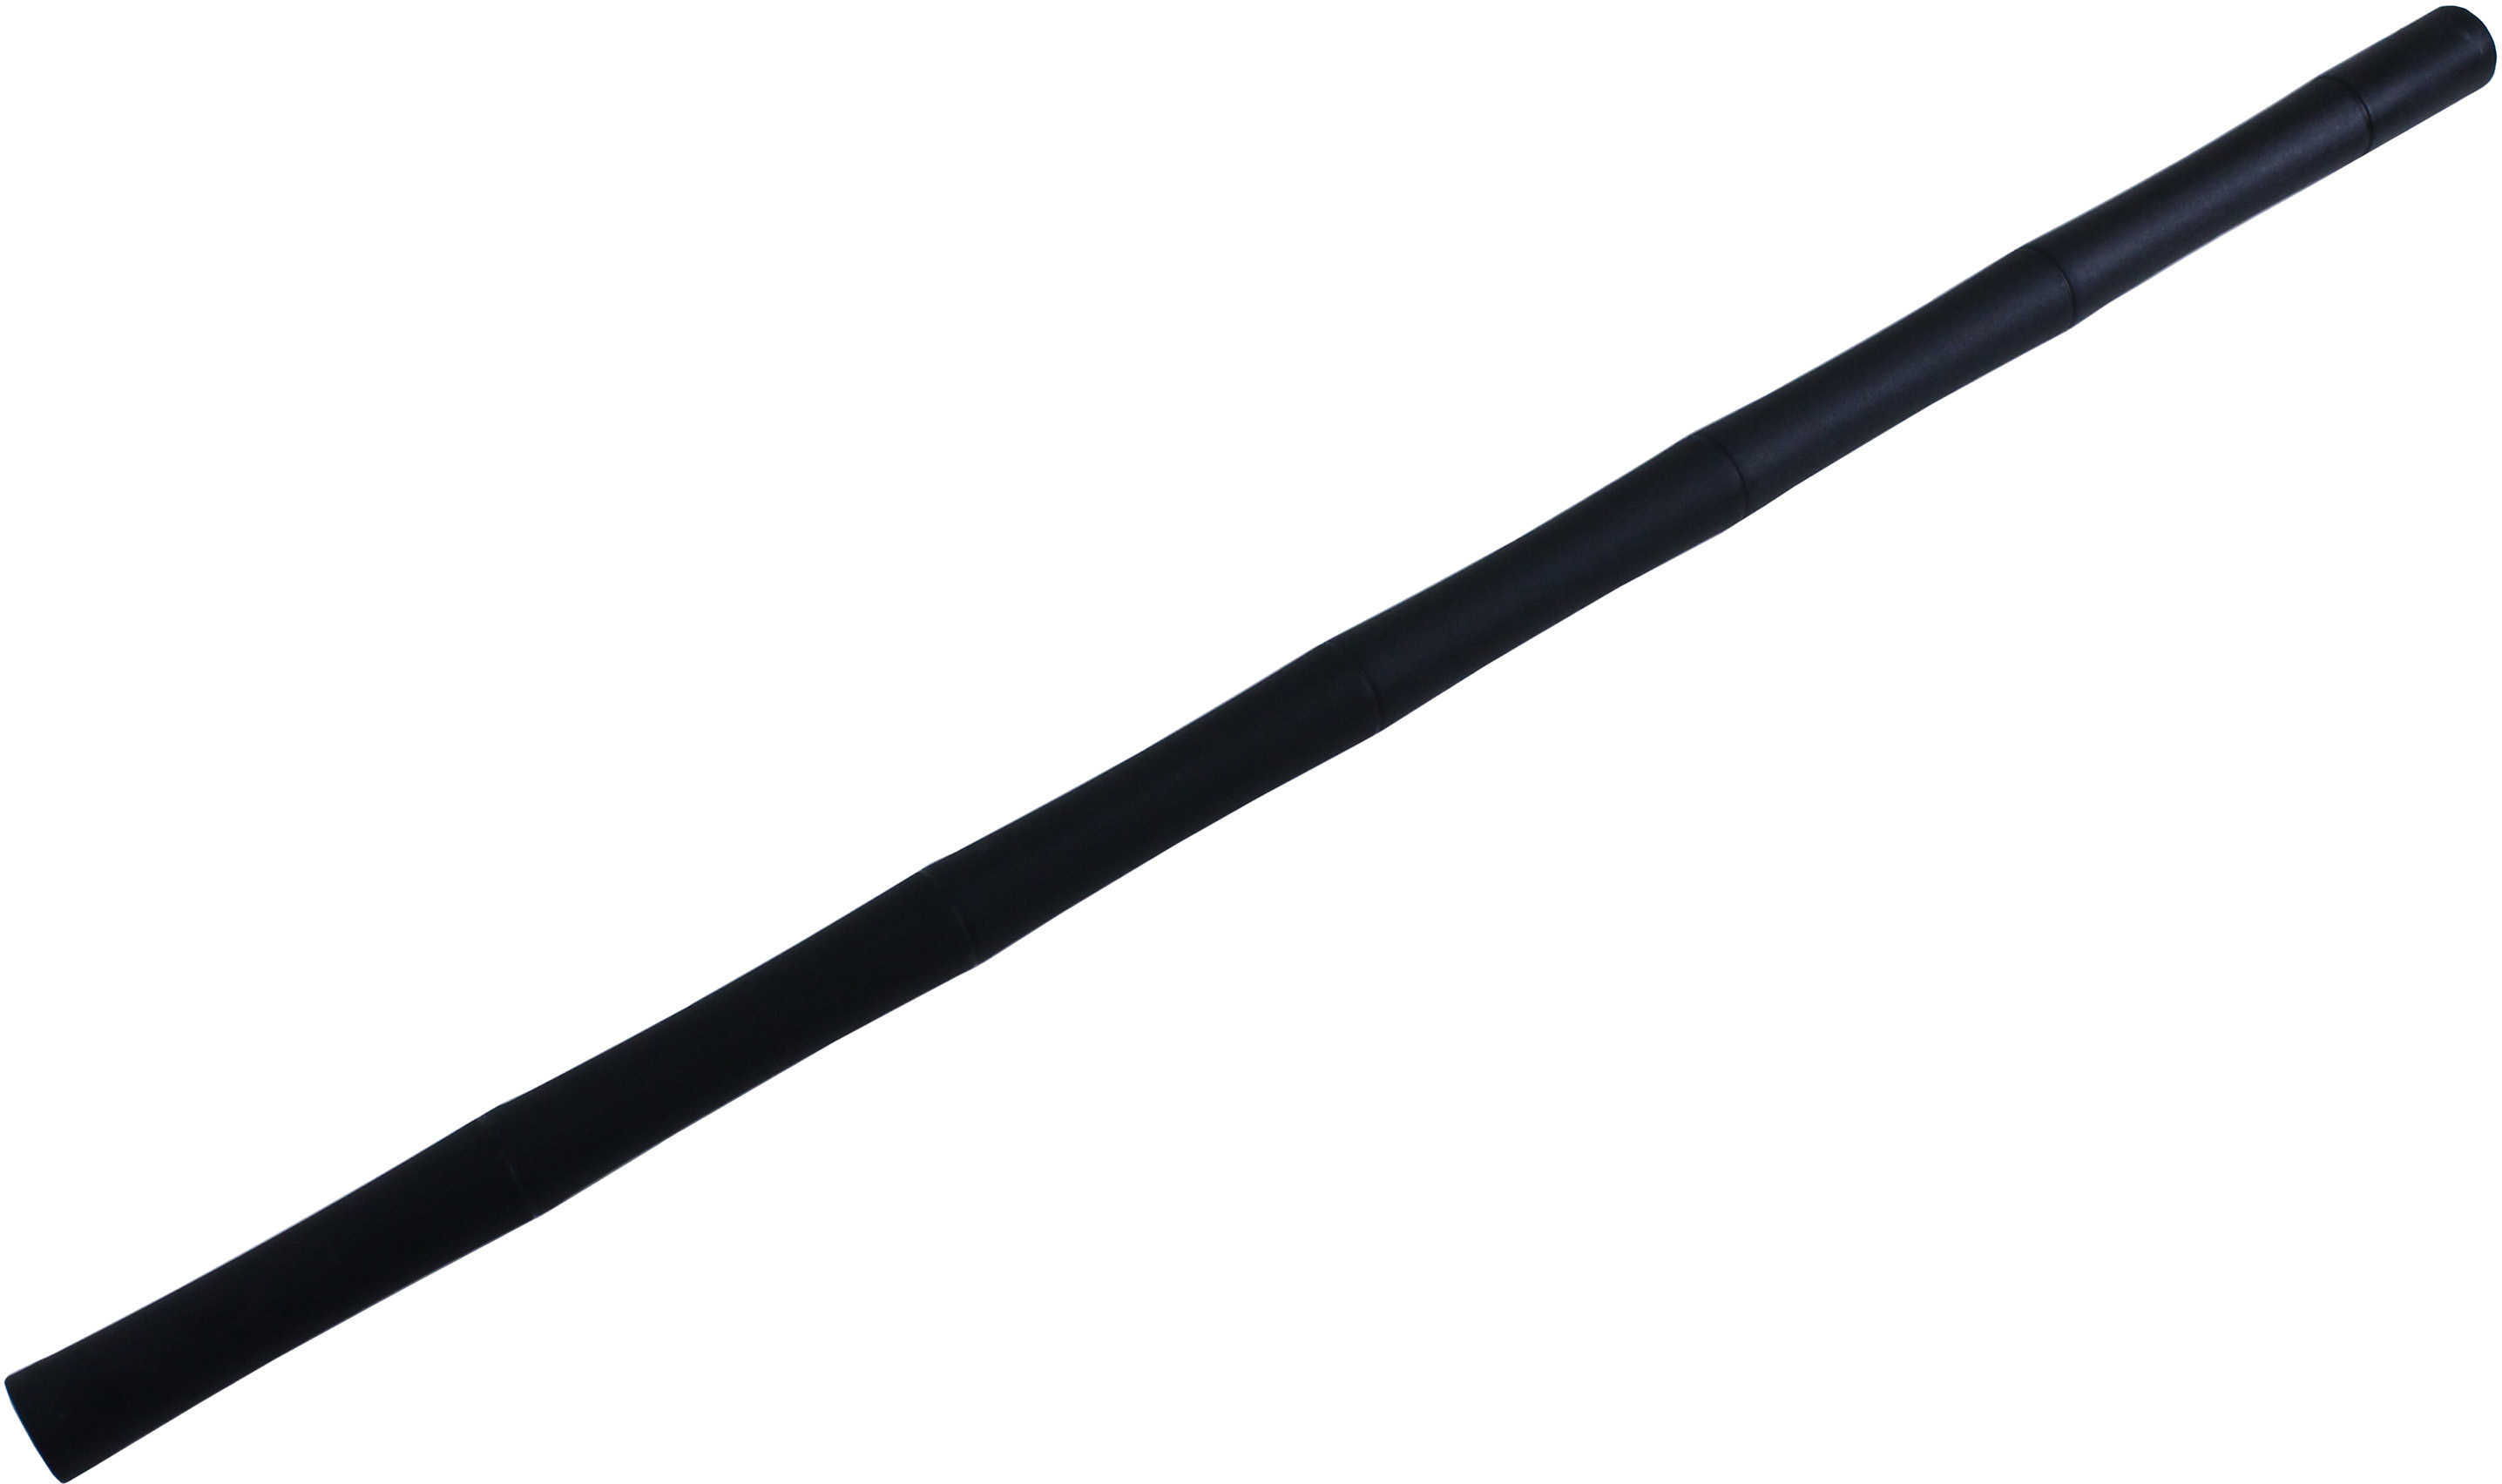 Cold Steel Escrima Stick - Brand New In Package